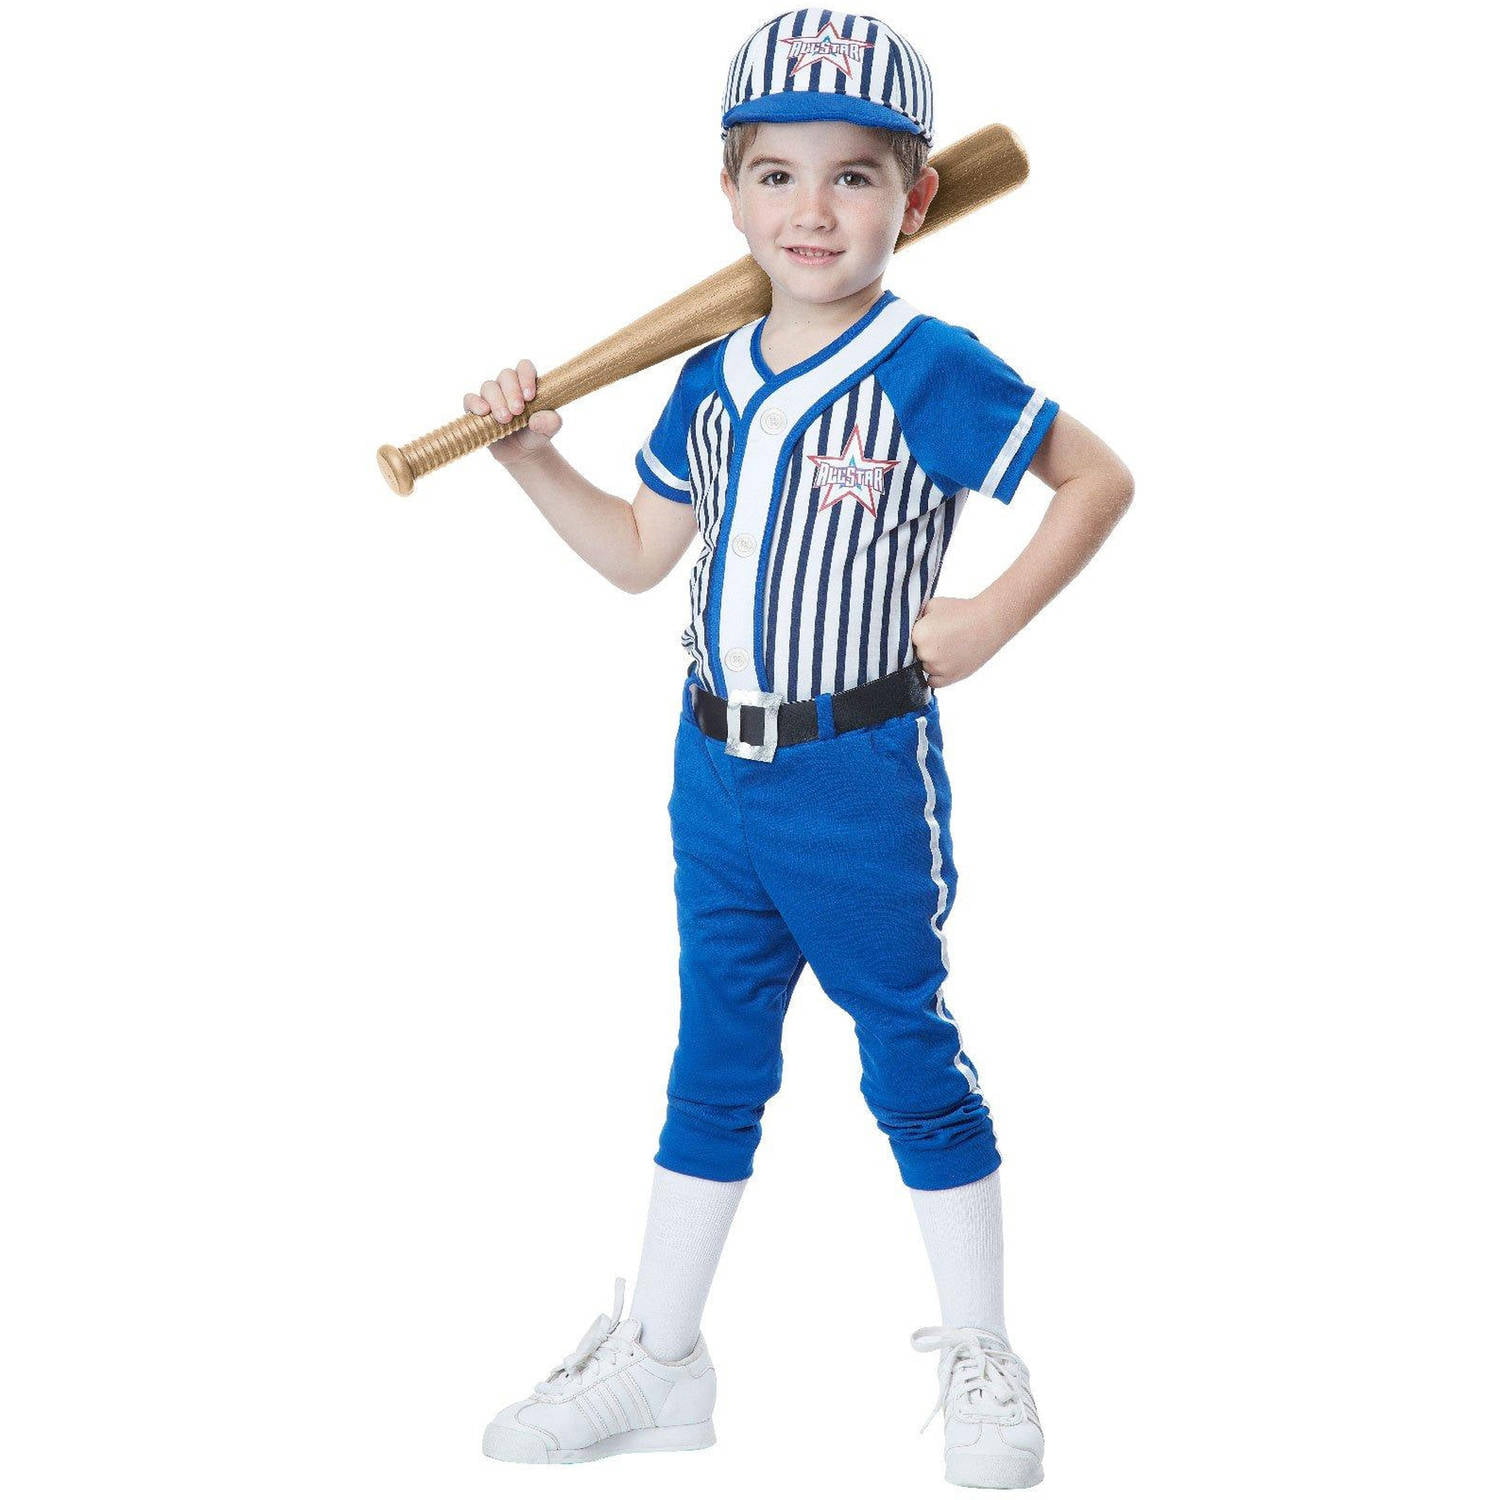 Baseball Player Child Halloween Costume, 3T-4T